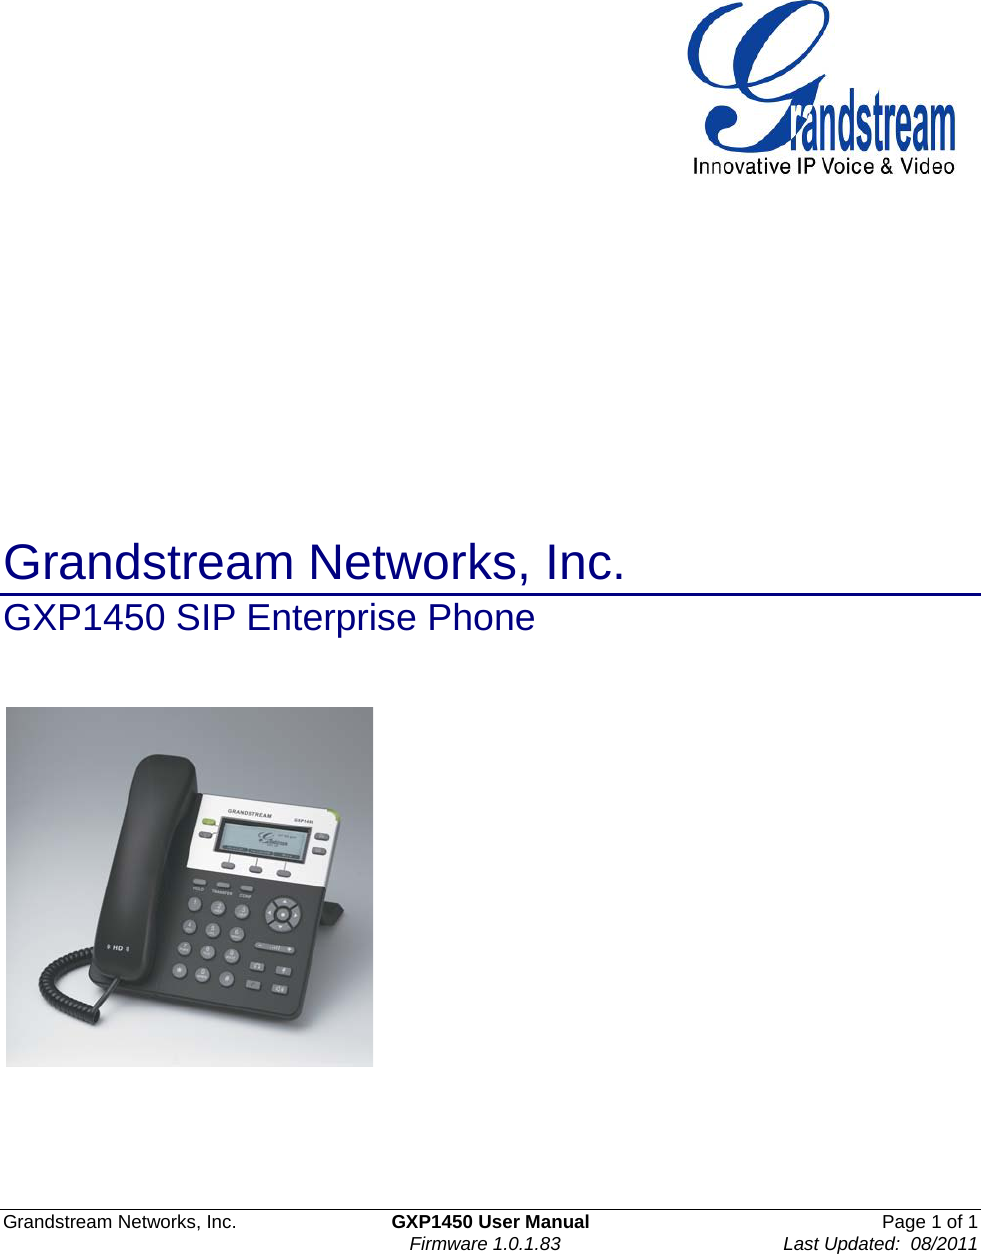  Grandstream Networks, Inc. GXP1450 User Manual Page 1 of 1                                                                               Firmware 1.0.1.83                                    Last Updated:  08/2011                      Grandstream Networks, Inc.   GXP1450 SIP Enterprise Phone       